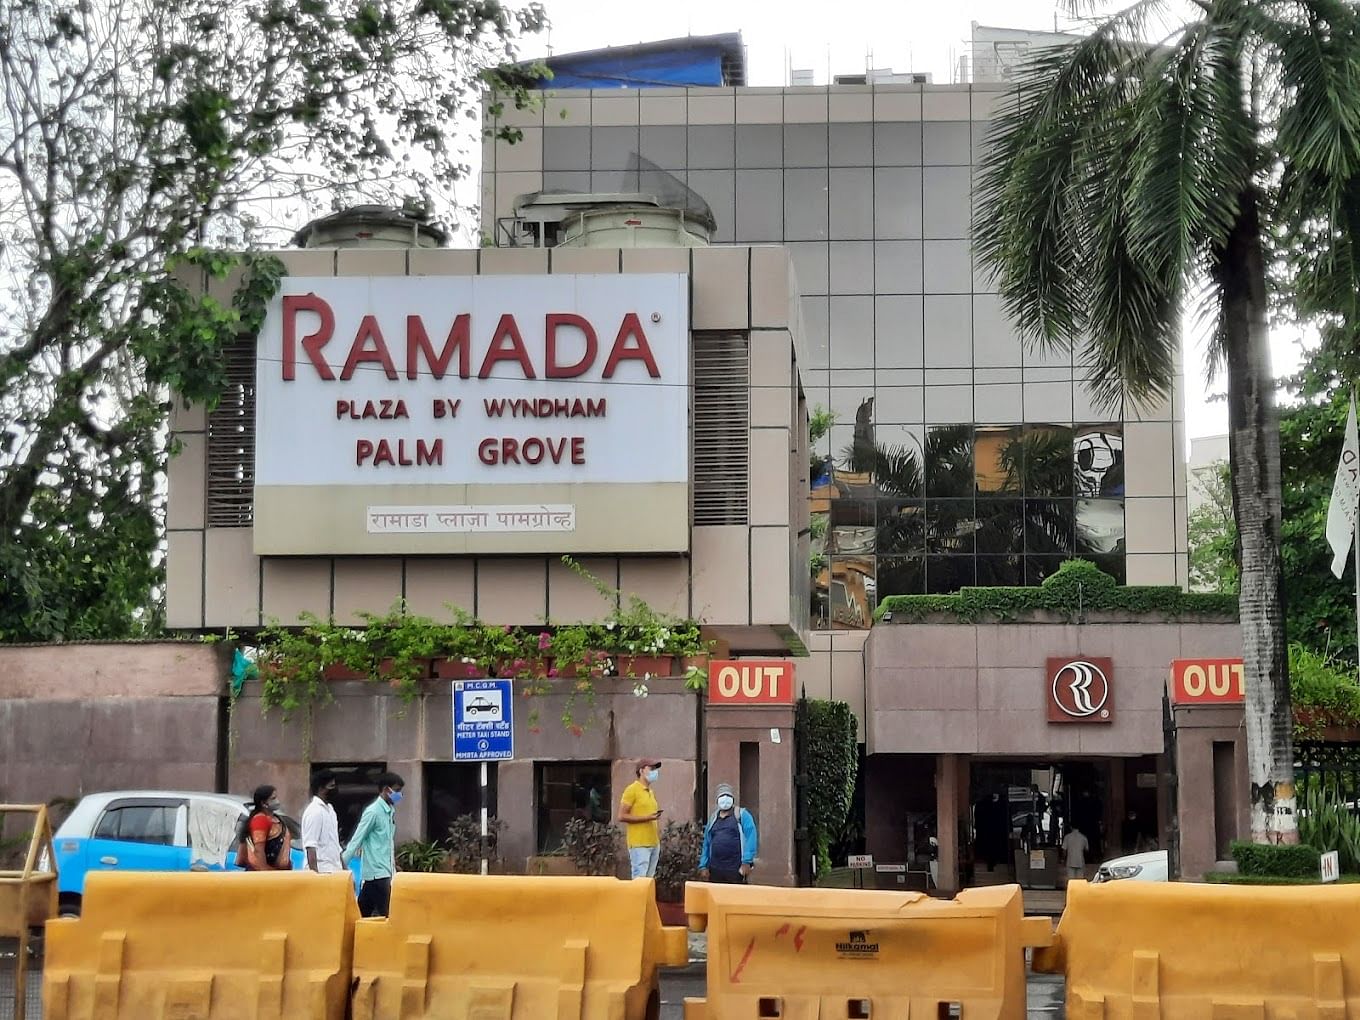 Ramada Plaza Palm Grove in Juhu, Mumbai